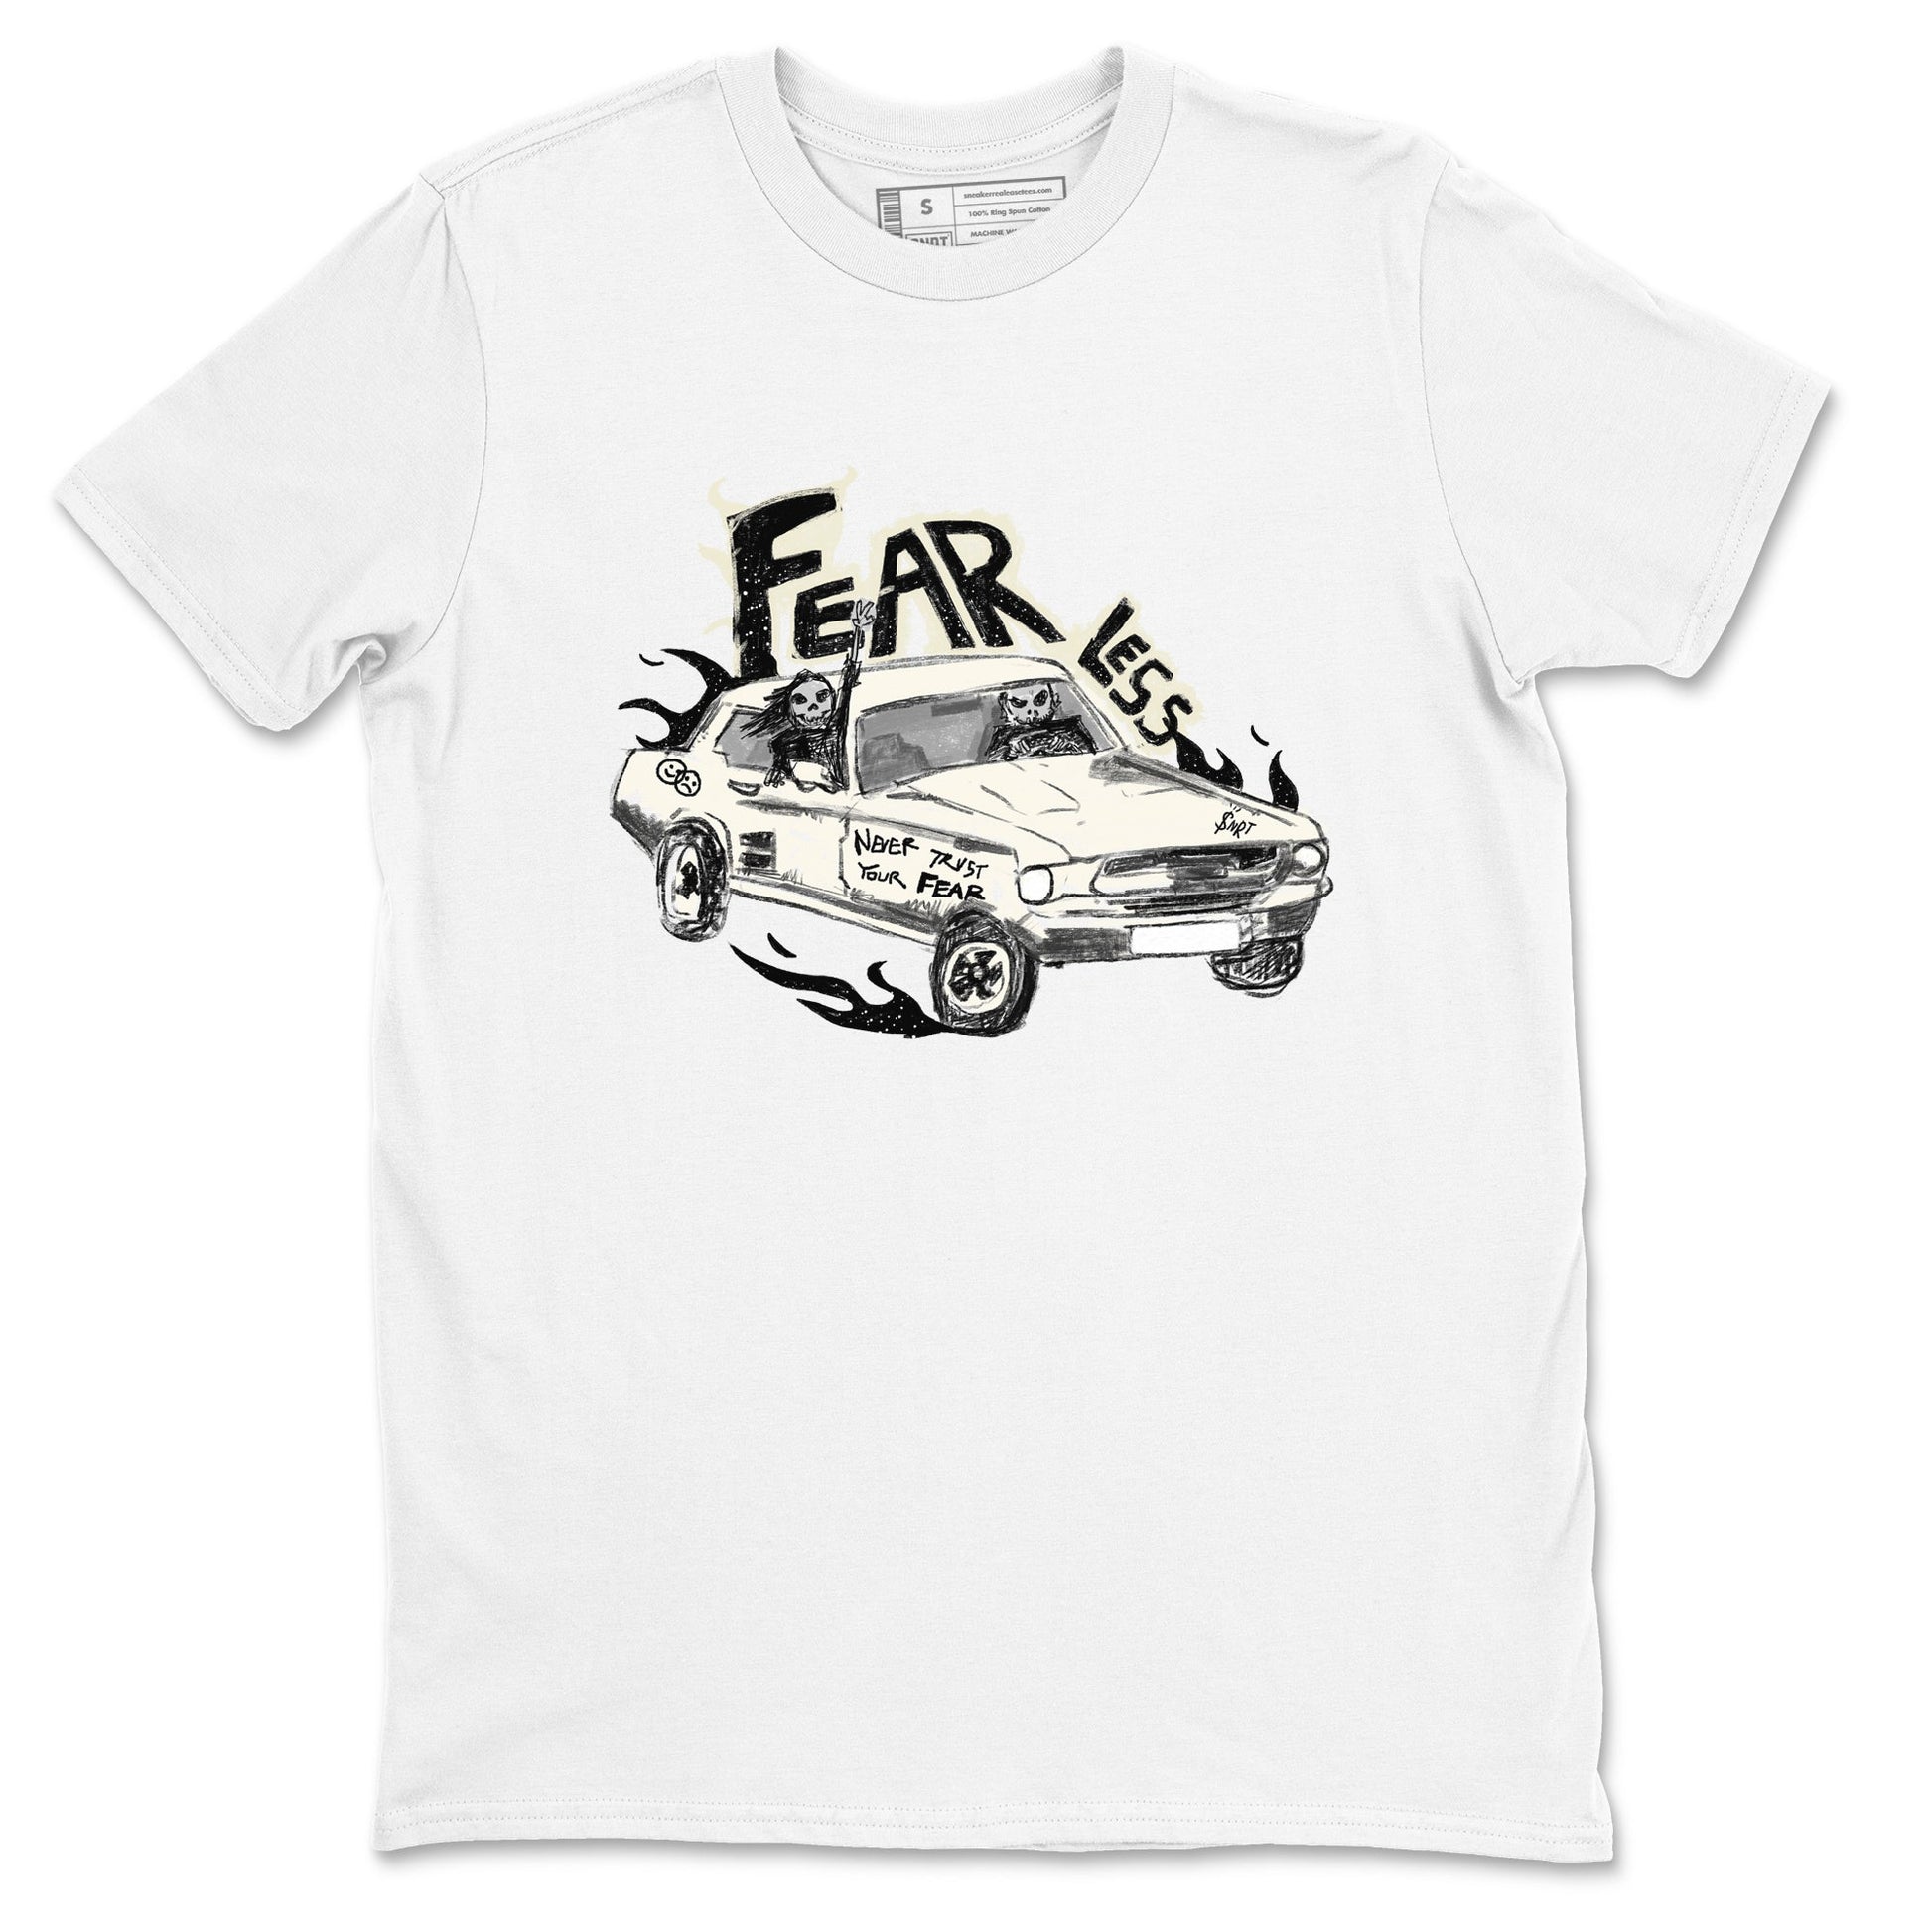 5s Sail shirt to match jordans Fearless Car sneaker tees Air Jordan 5 Sail SNRT Sneaker Release Tees unisex cotton White 2 crew neck shirt